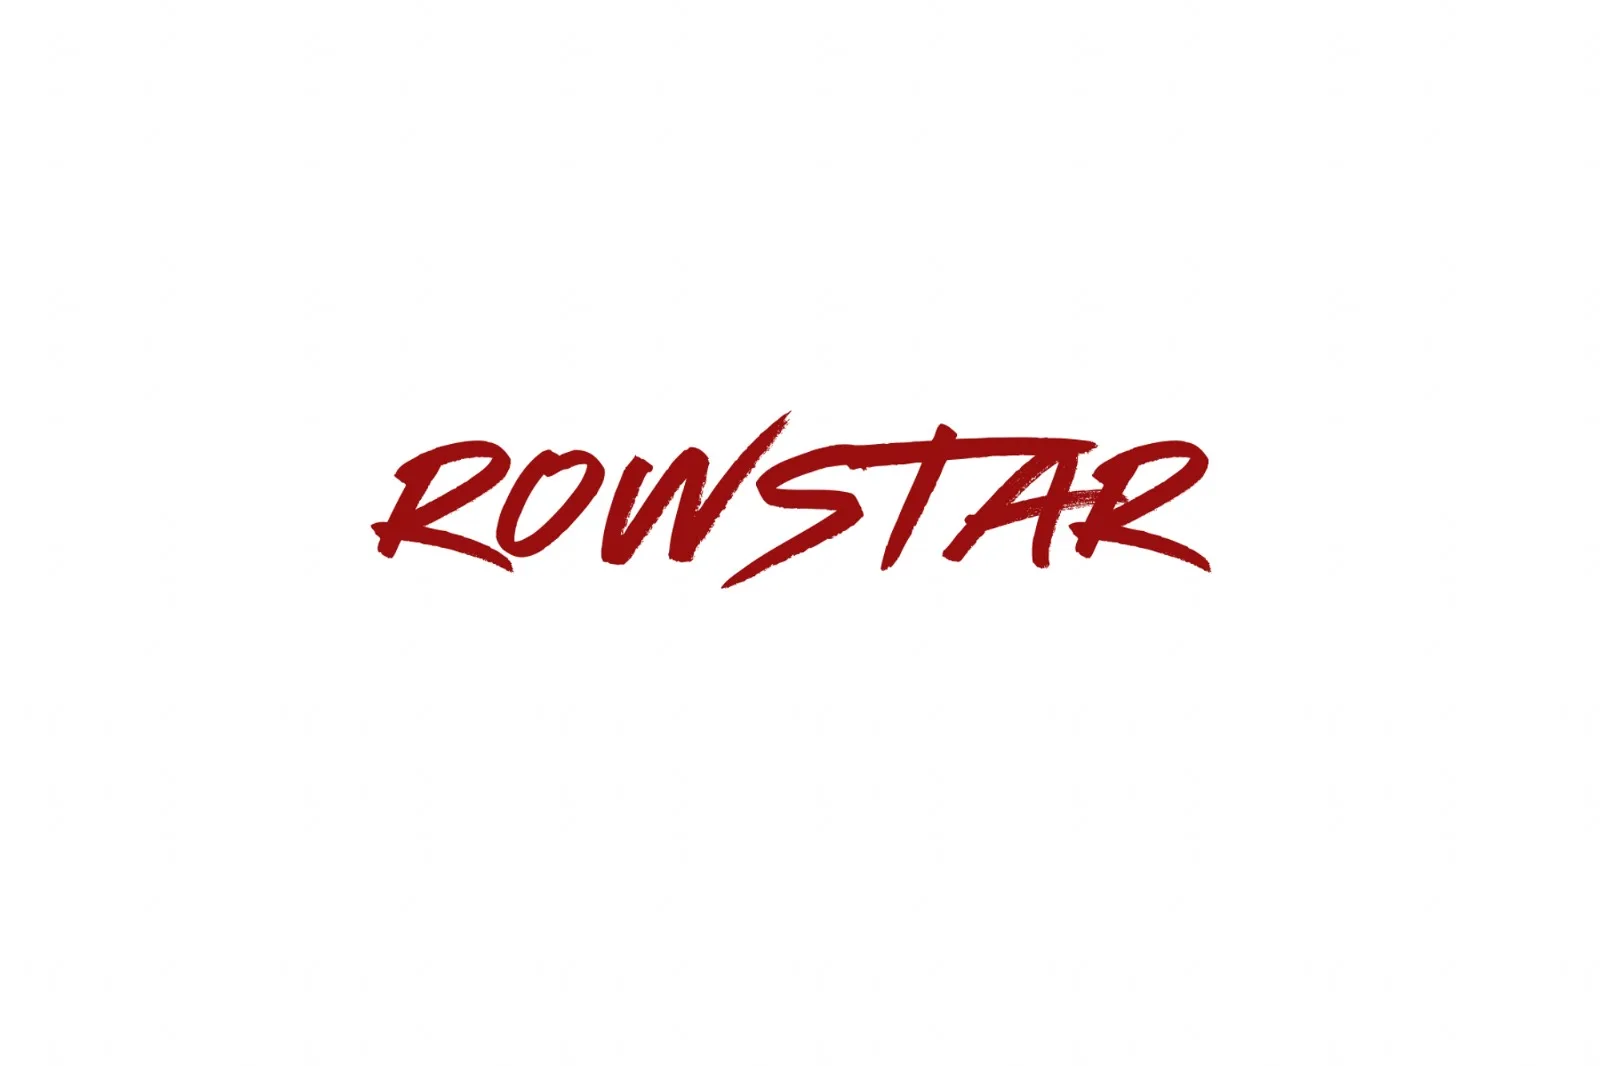 Rowstar : Keep fashion weird